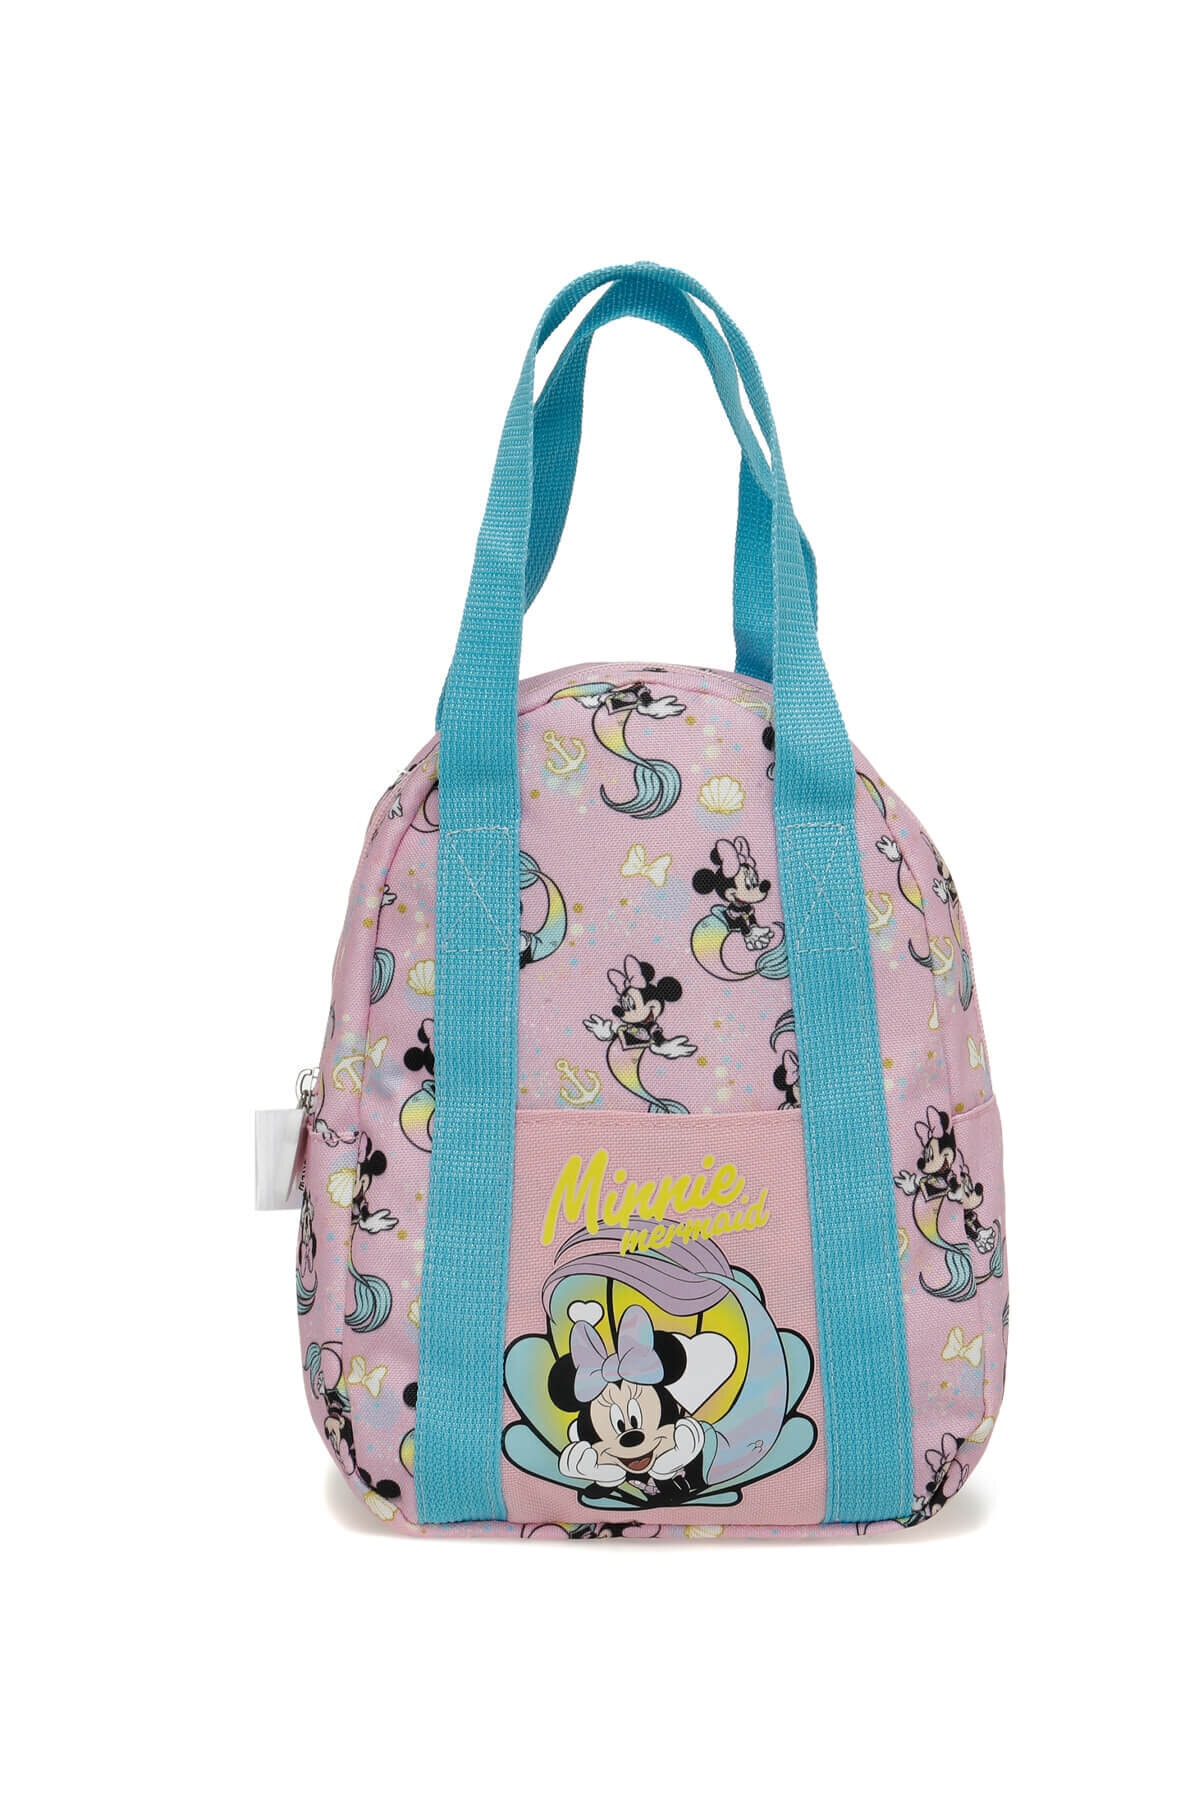 Minnie Mouse Knkn Mınnıe Srt 3fx Çok Renkli Kız Çocuk Sırt Çantası